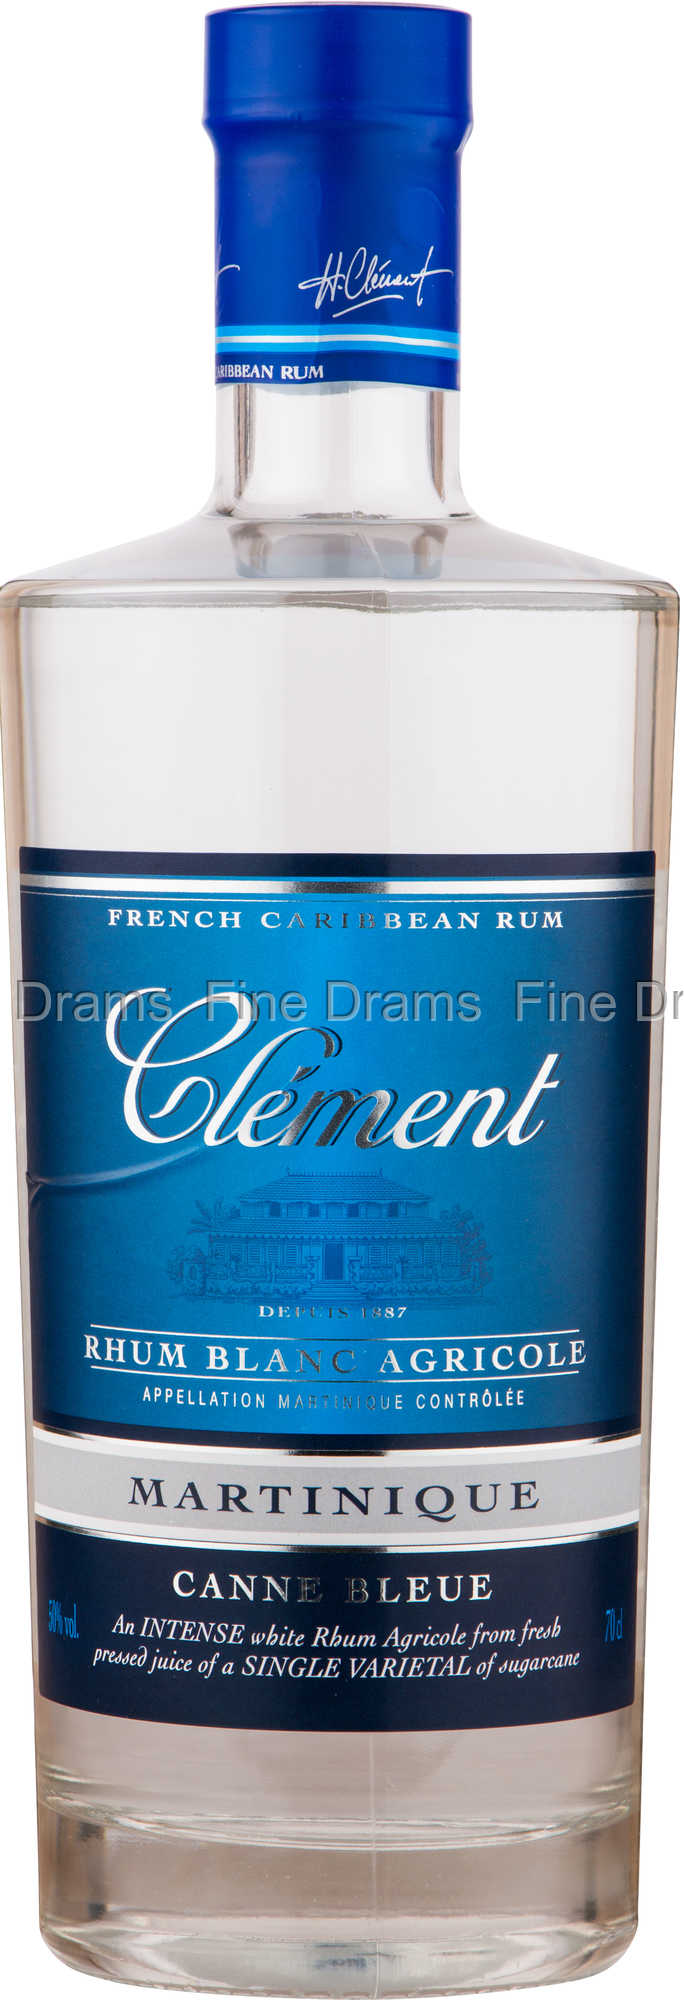 Rhum Clement Creole Shrubb Liqueur 700ml :: Rum